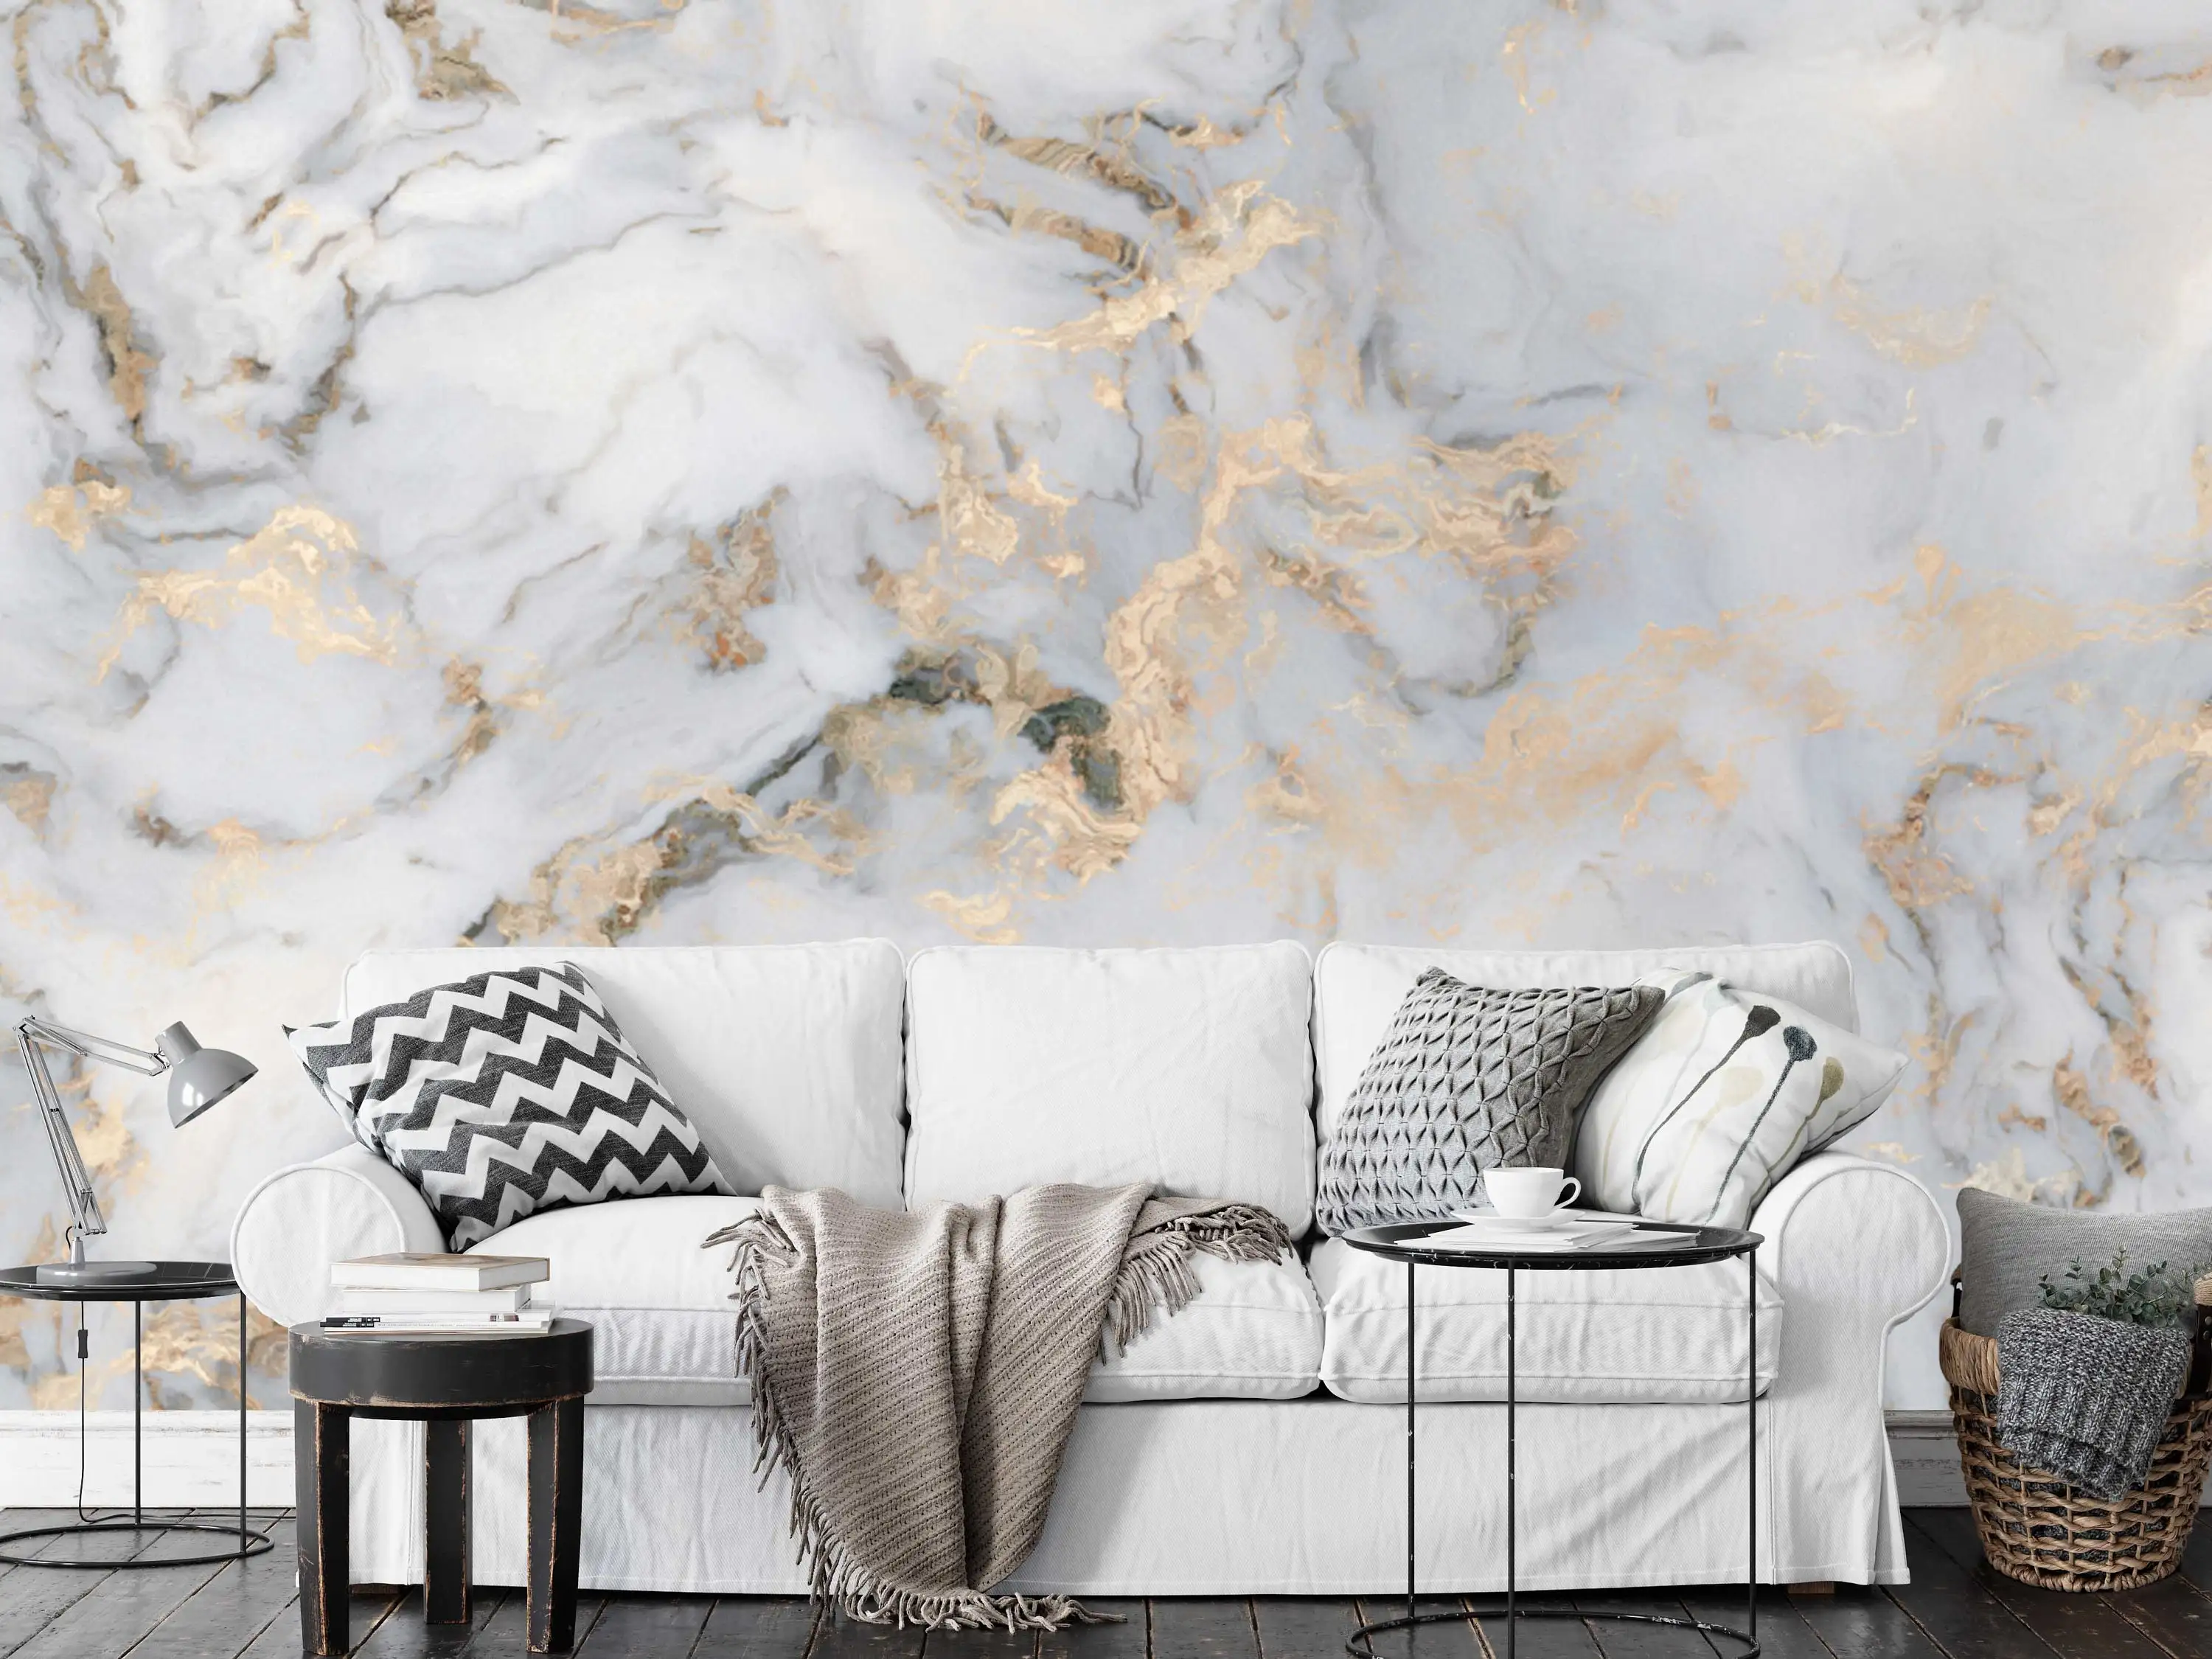 Panel Tipo Marmol Pvc Blanco Carrara Homely Elegance Homely Elegance Tipo  Marmol